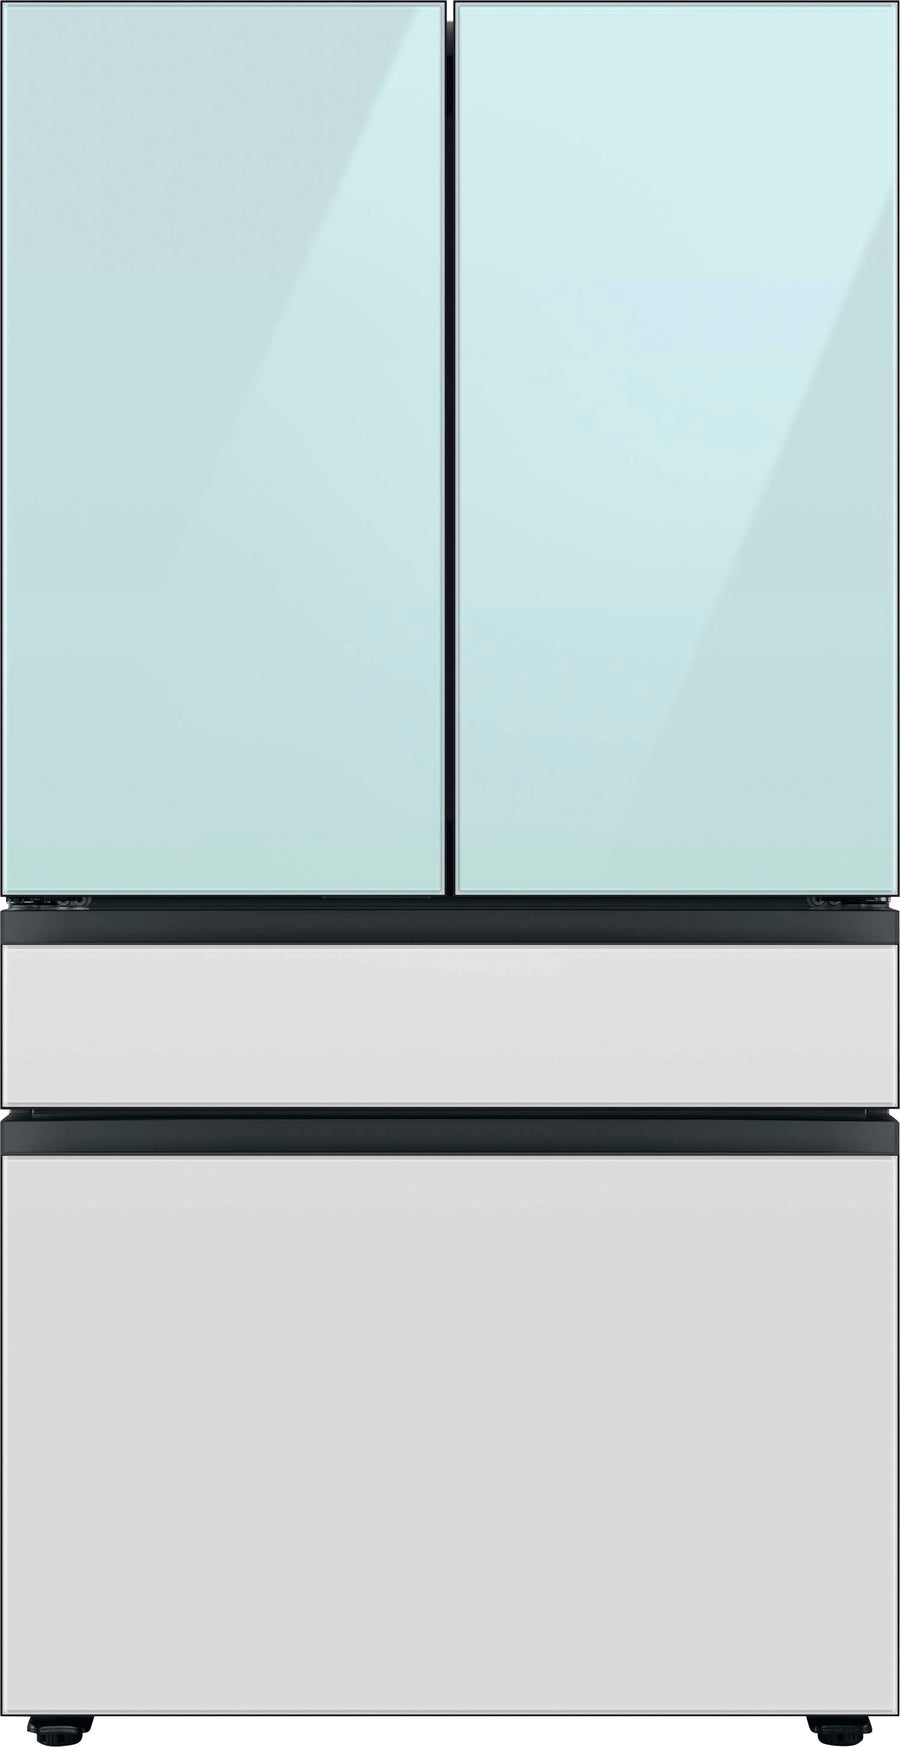 Samsung - Open Box BESPOKE 29 cu. ft 4-Door French Door Refrigerator with Beverage Center - Morning Blue Glass_0